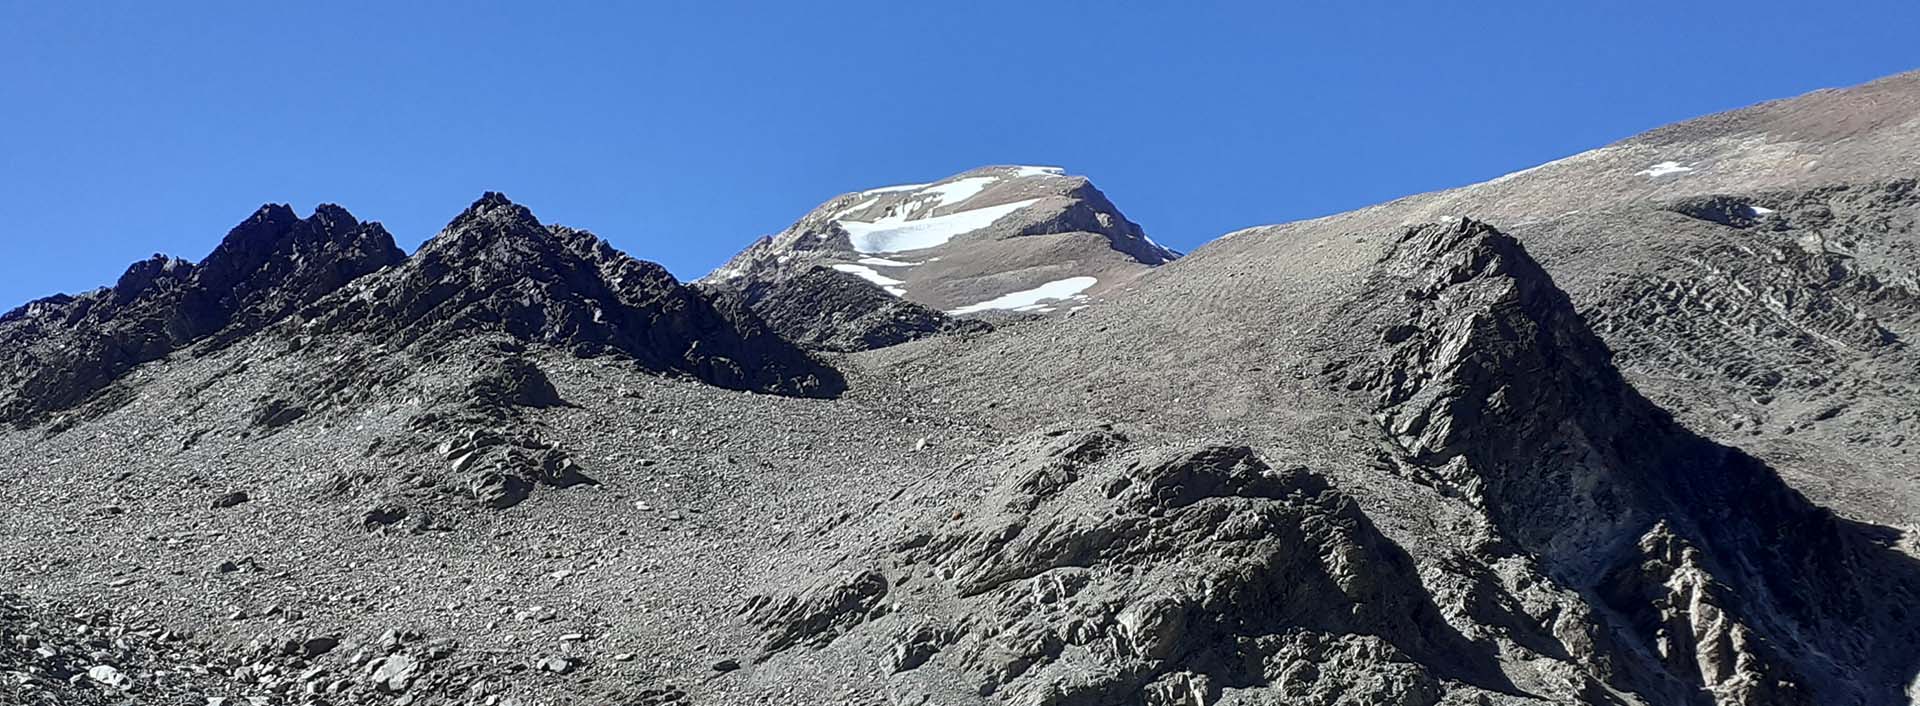 Yunam Peak 6111m Himachal